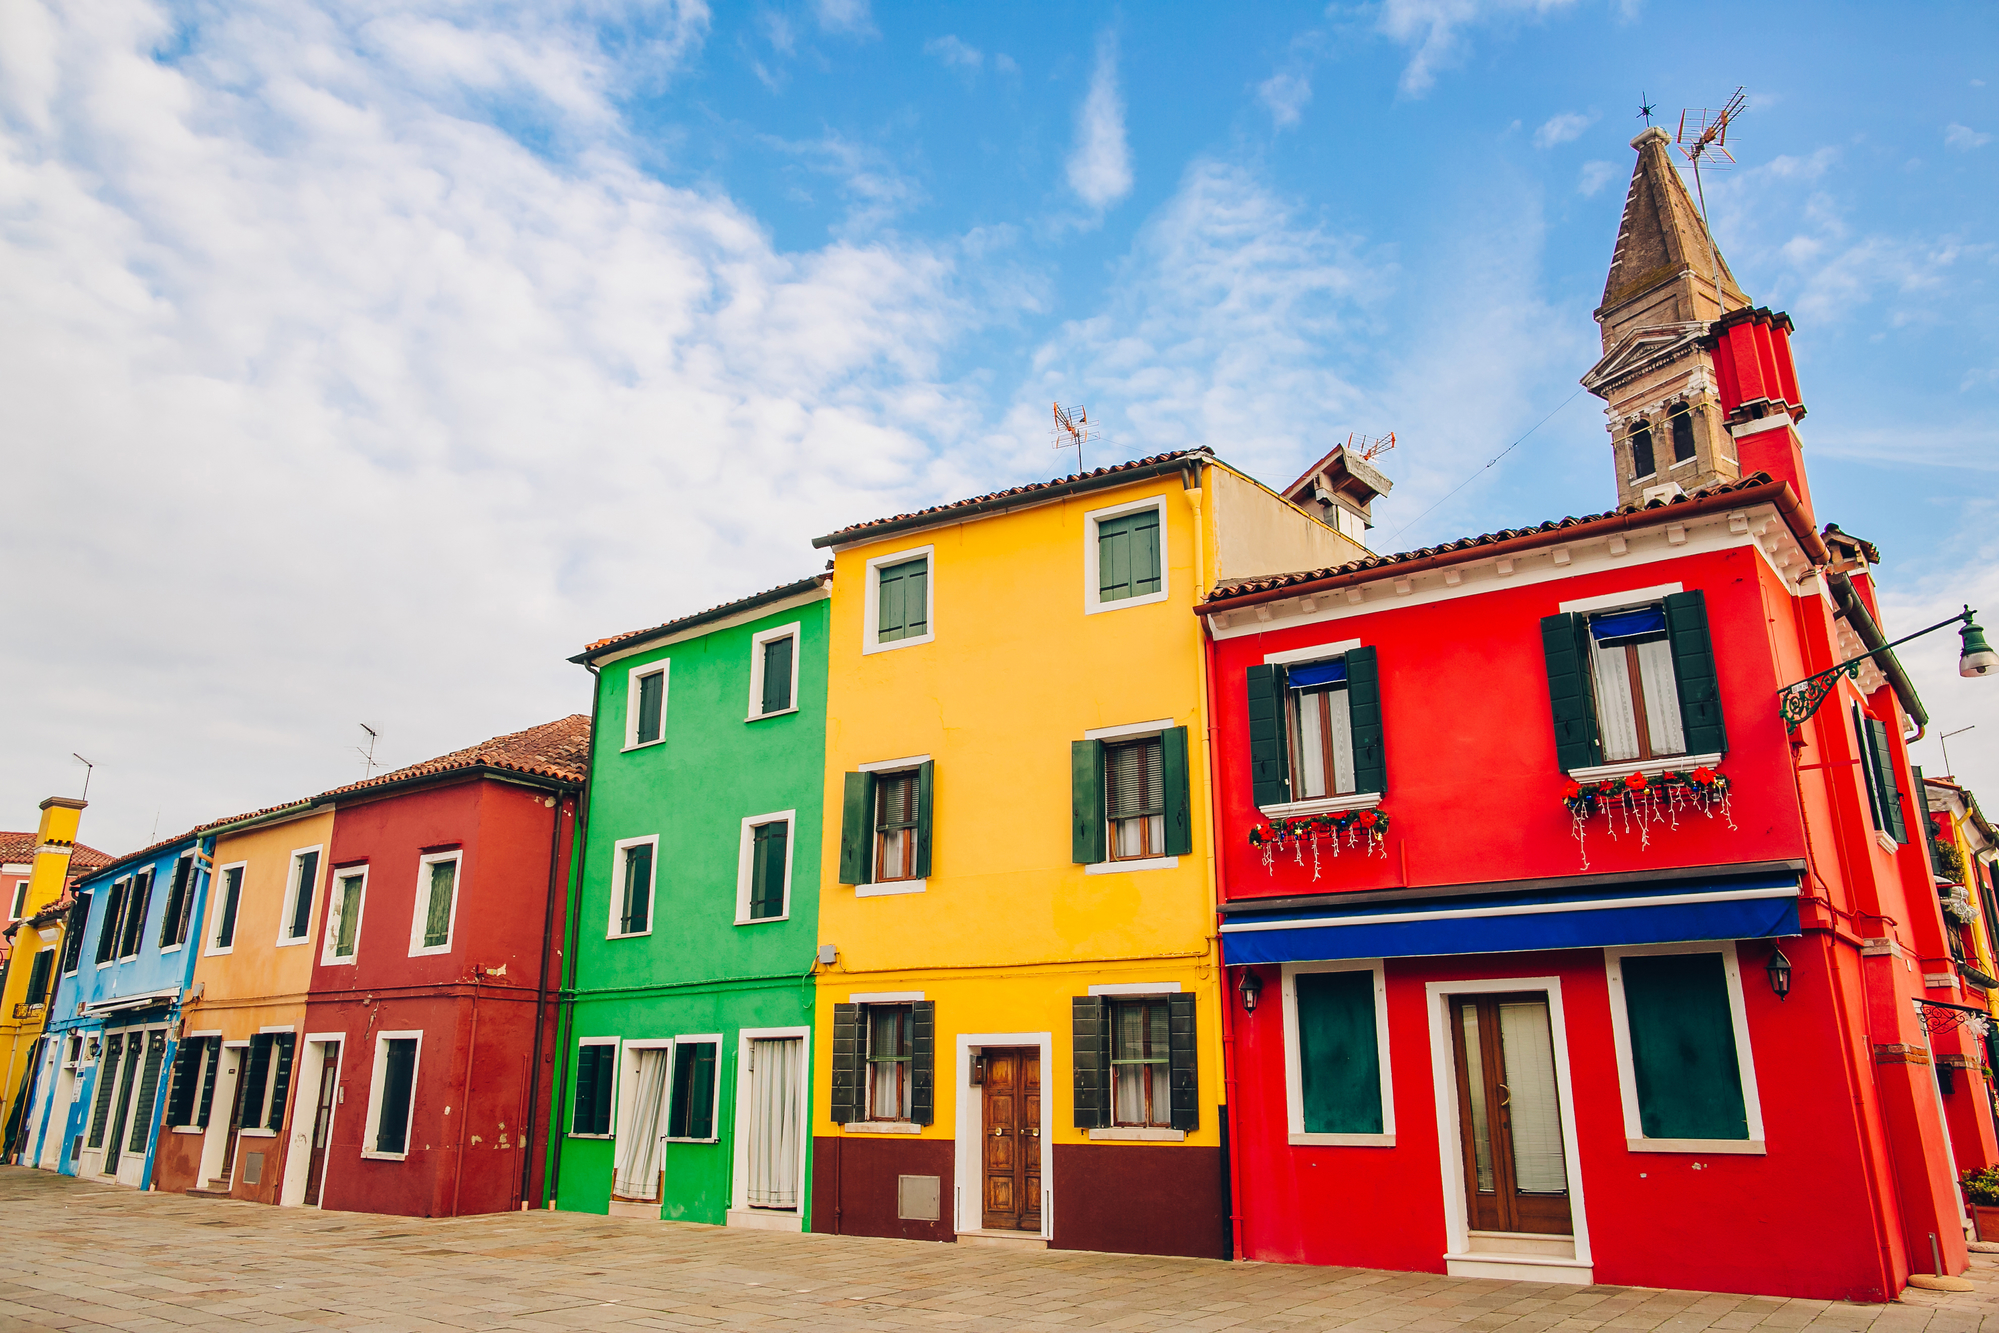 Colorful houses. Цветные домики. Разноцветный дом. Разноцветные домики. Разноцветные здания.